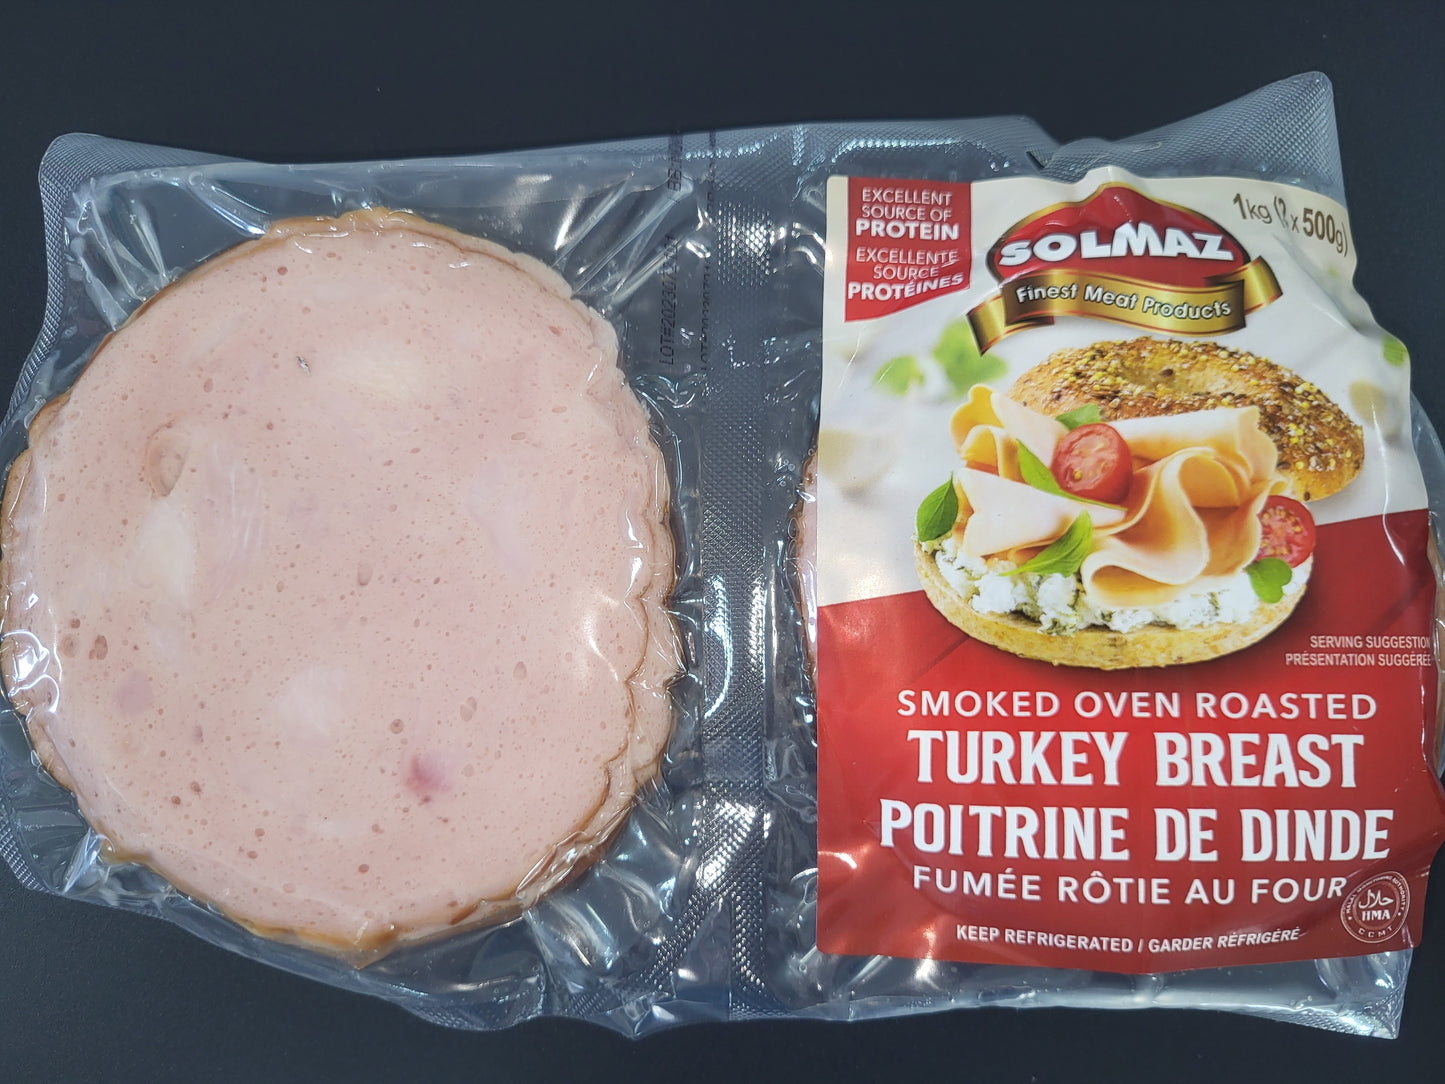 Solmaz Smoked oven roasted Turkey Breast 1kg